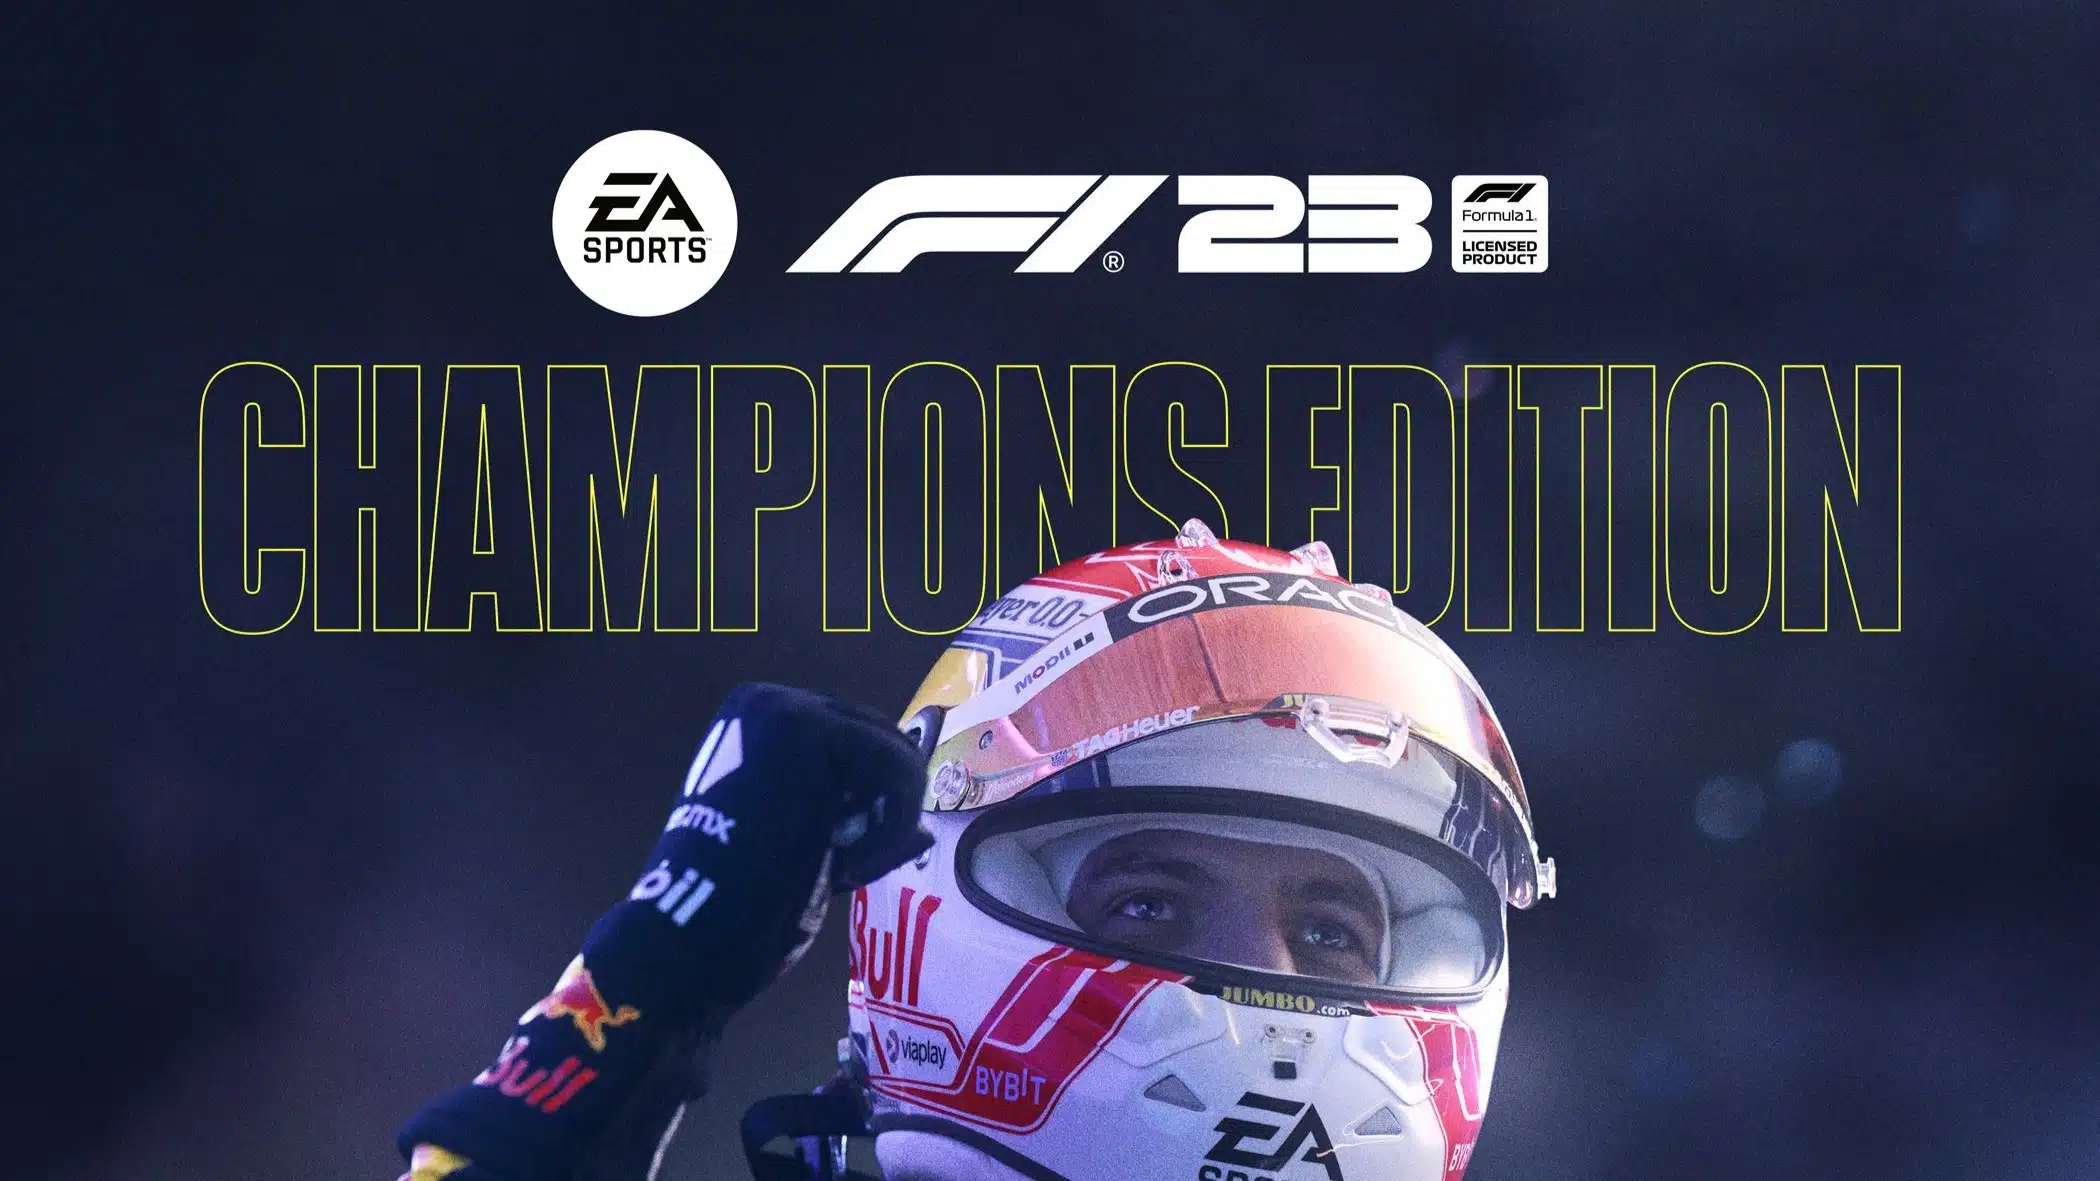 f1 23 champions edition cover